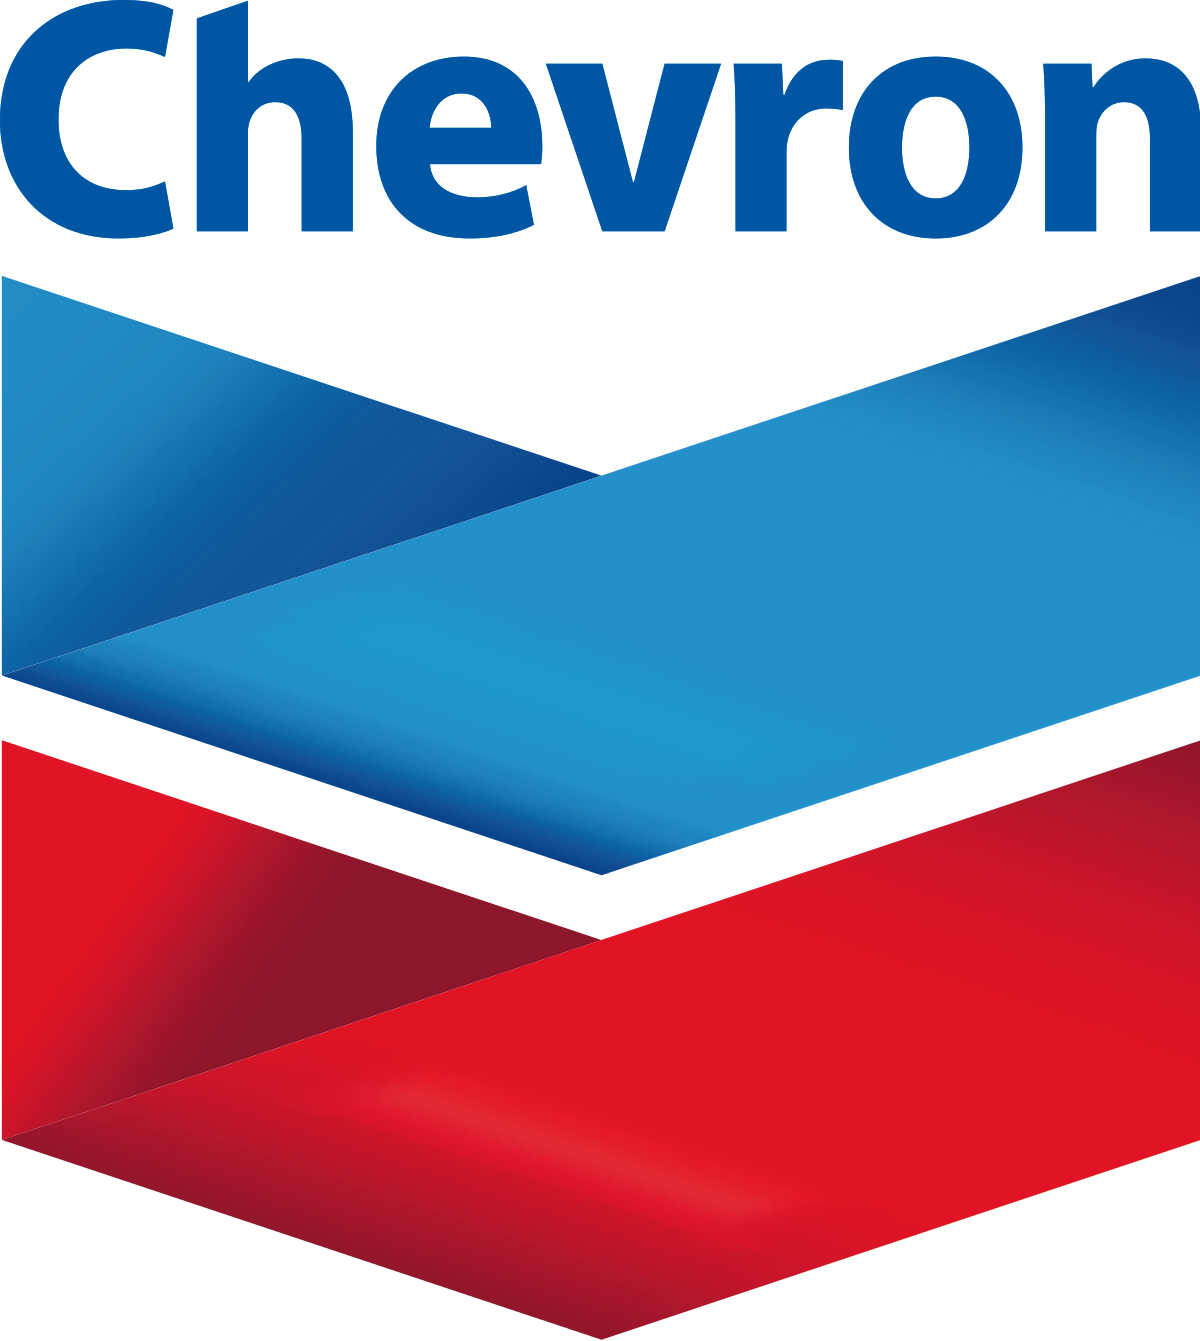 Chevron Thailand Exploration and Production